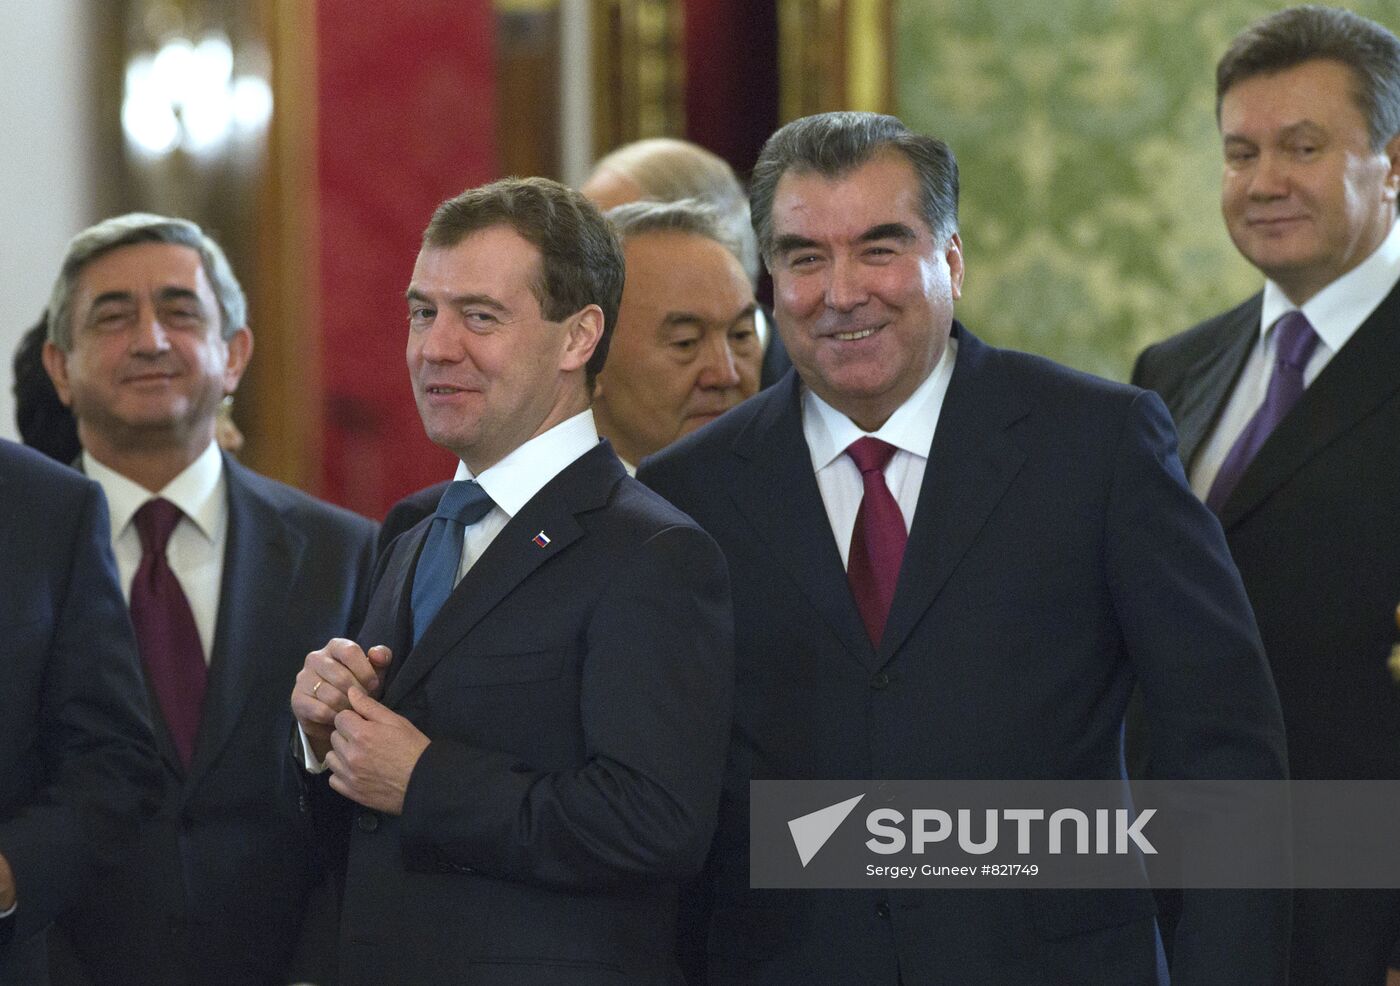 Dmitry Medvedev attends CSTO and CIS summit in Kremlin